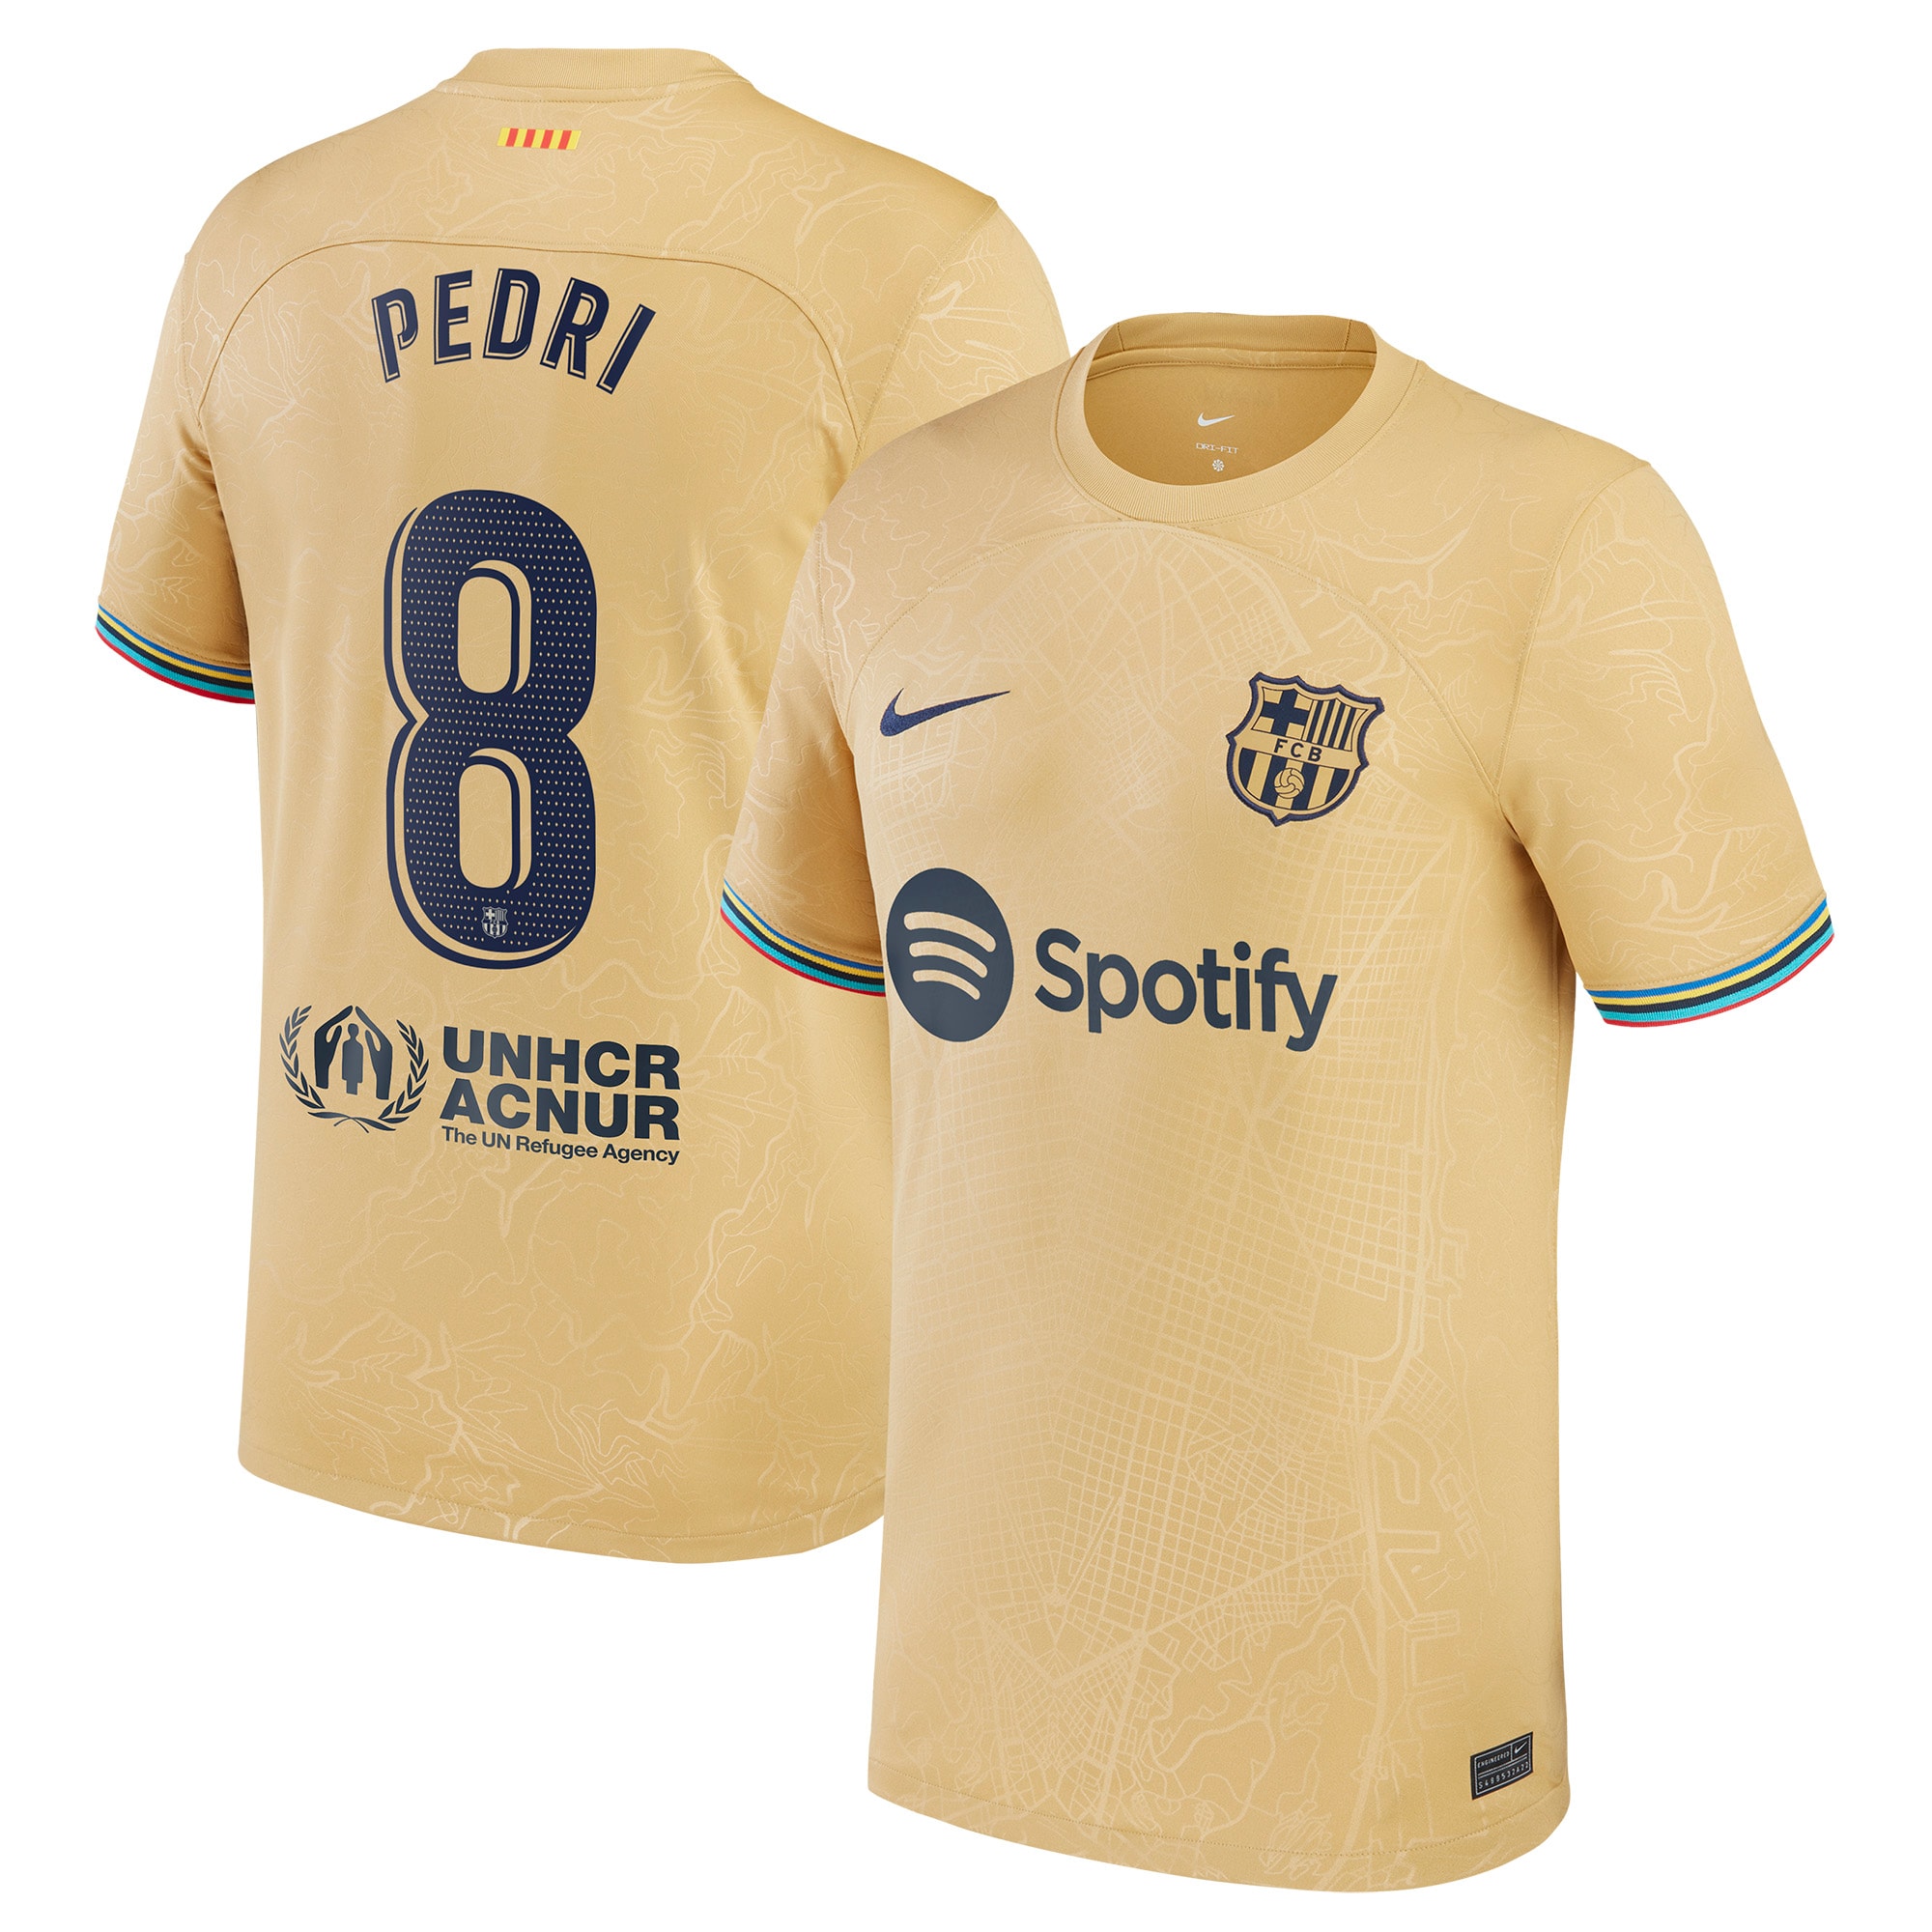 Pedri Barcelona 2022/23 Away Player Jersey